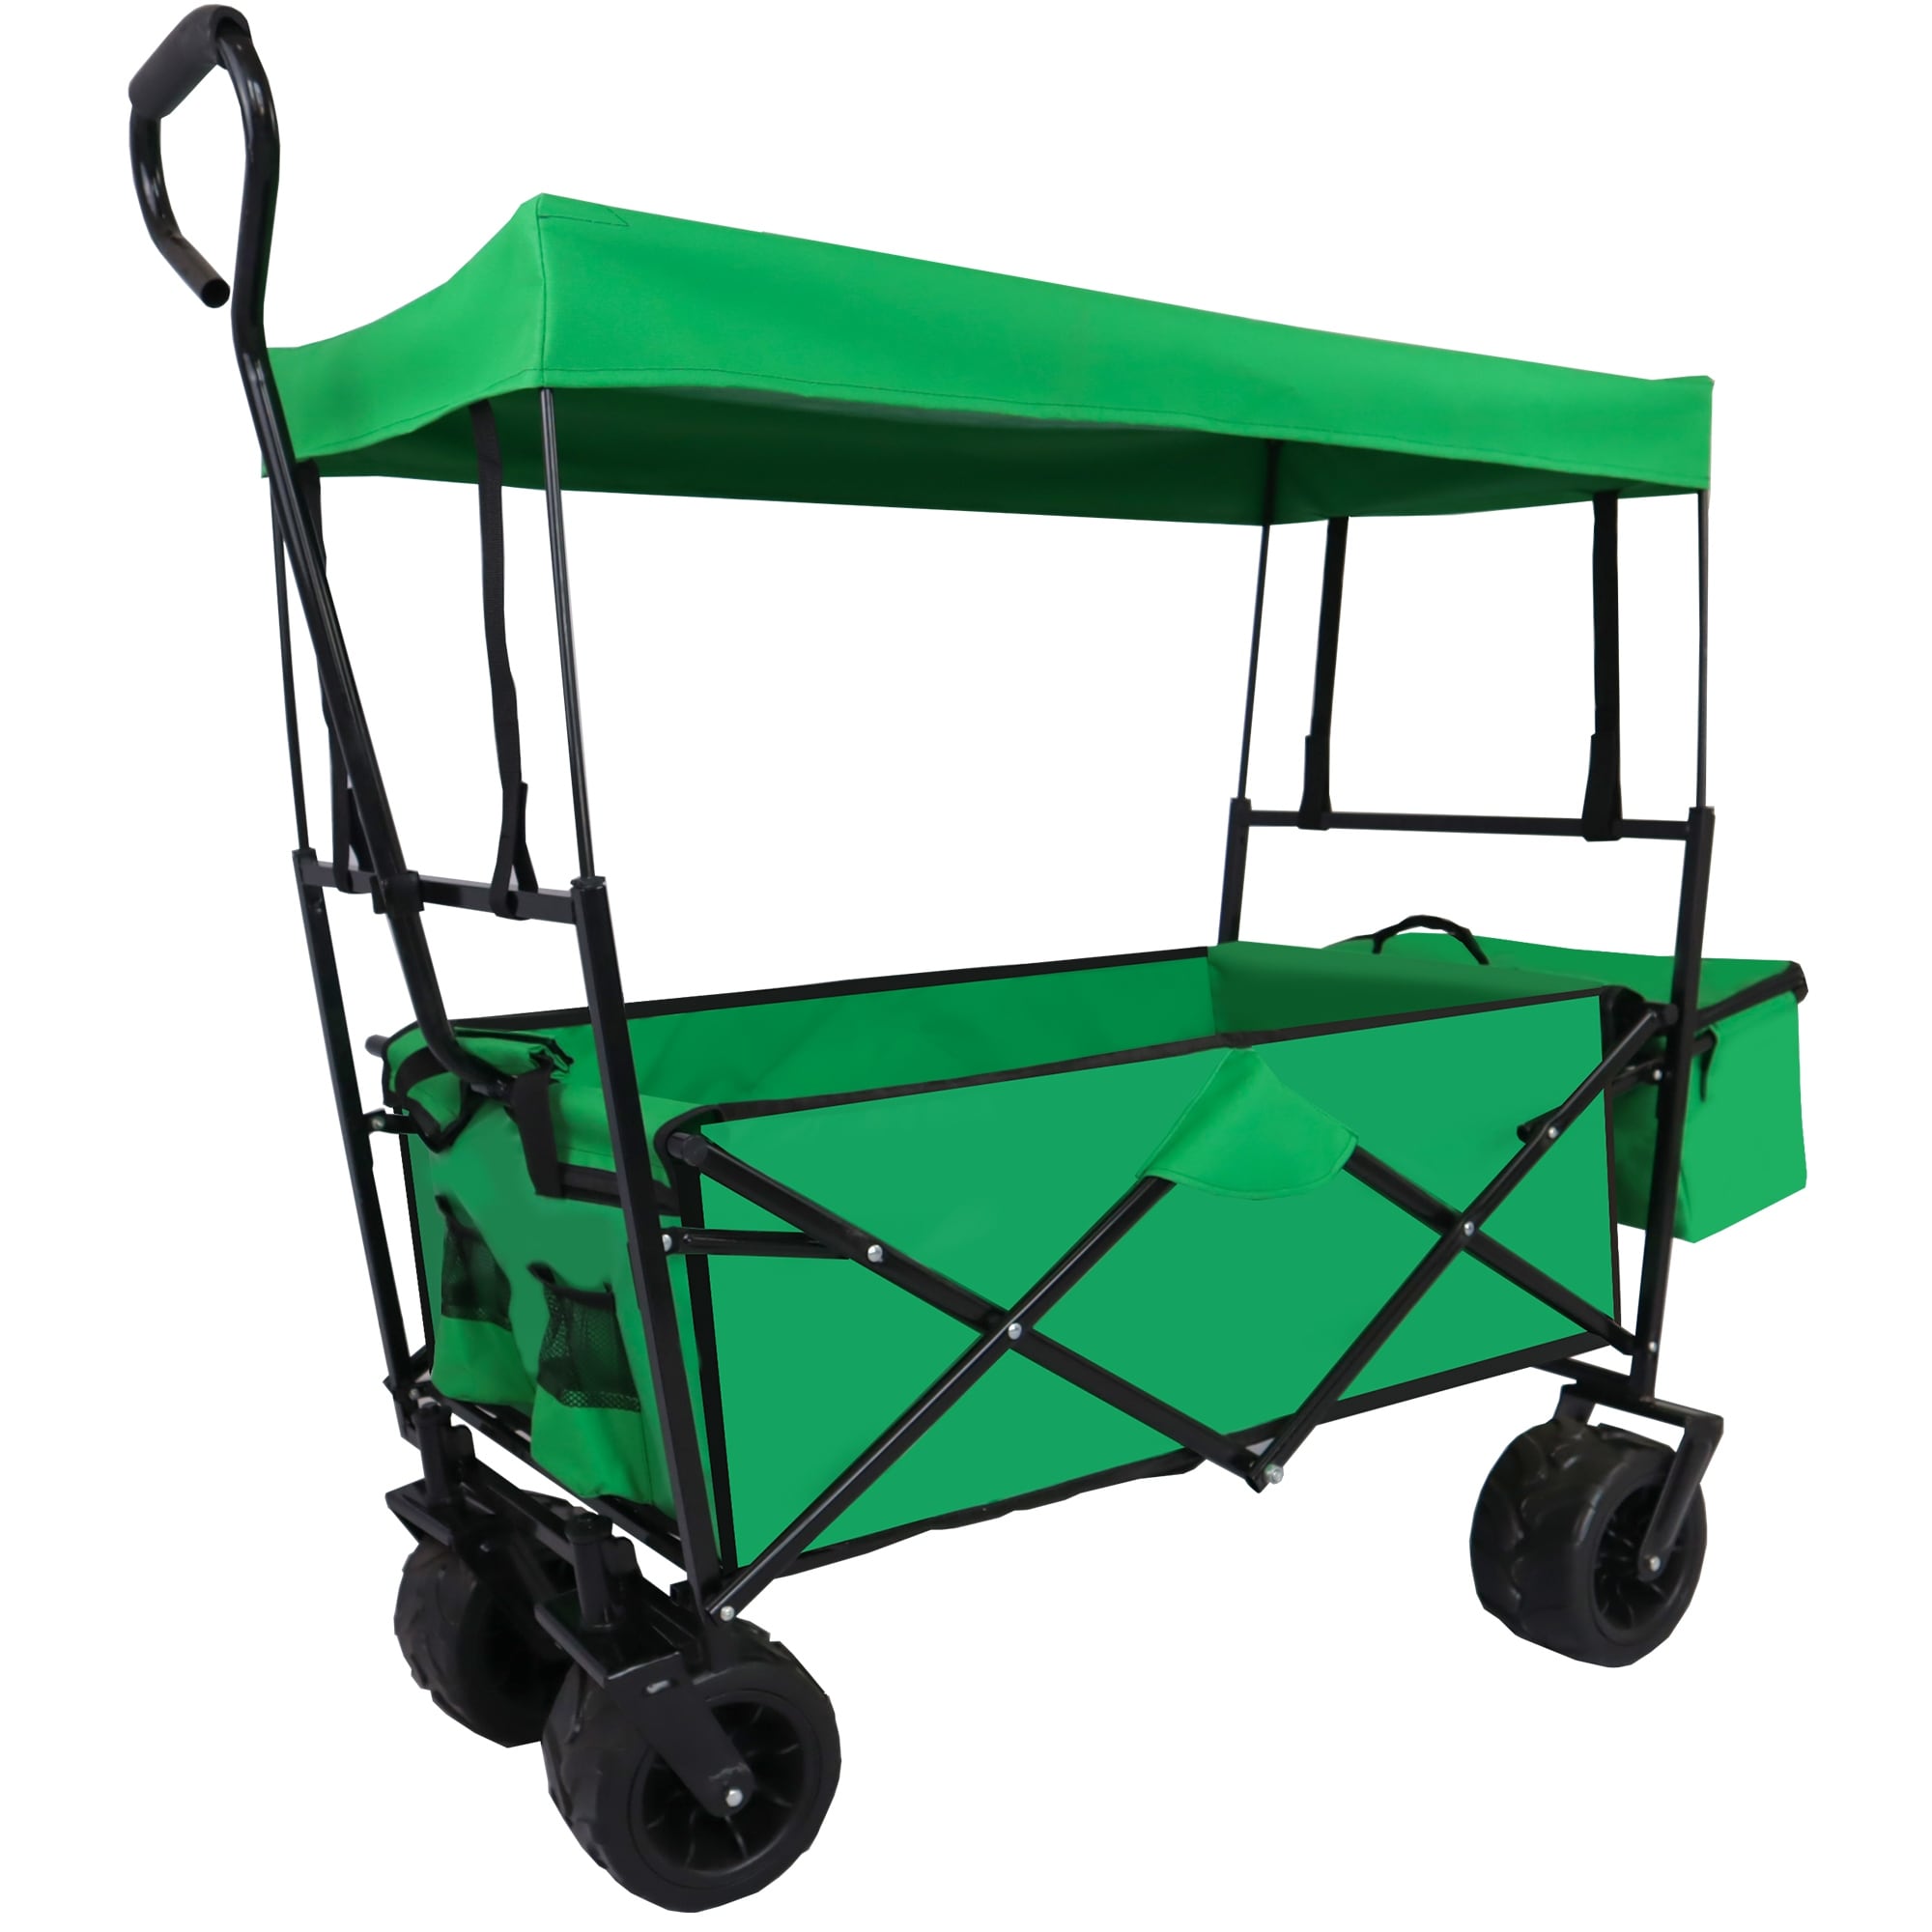 Wagon Cart Collapsible Folding Heavy Duty Utility Beach Wheels Outdoor  Garden US